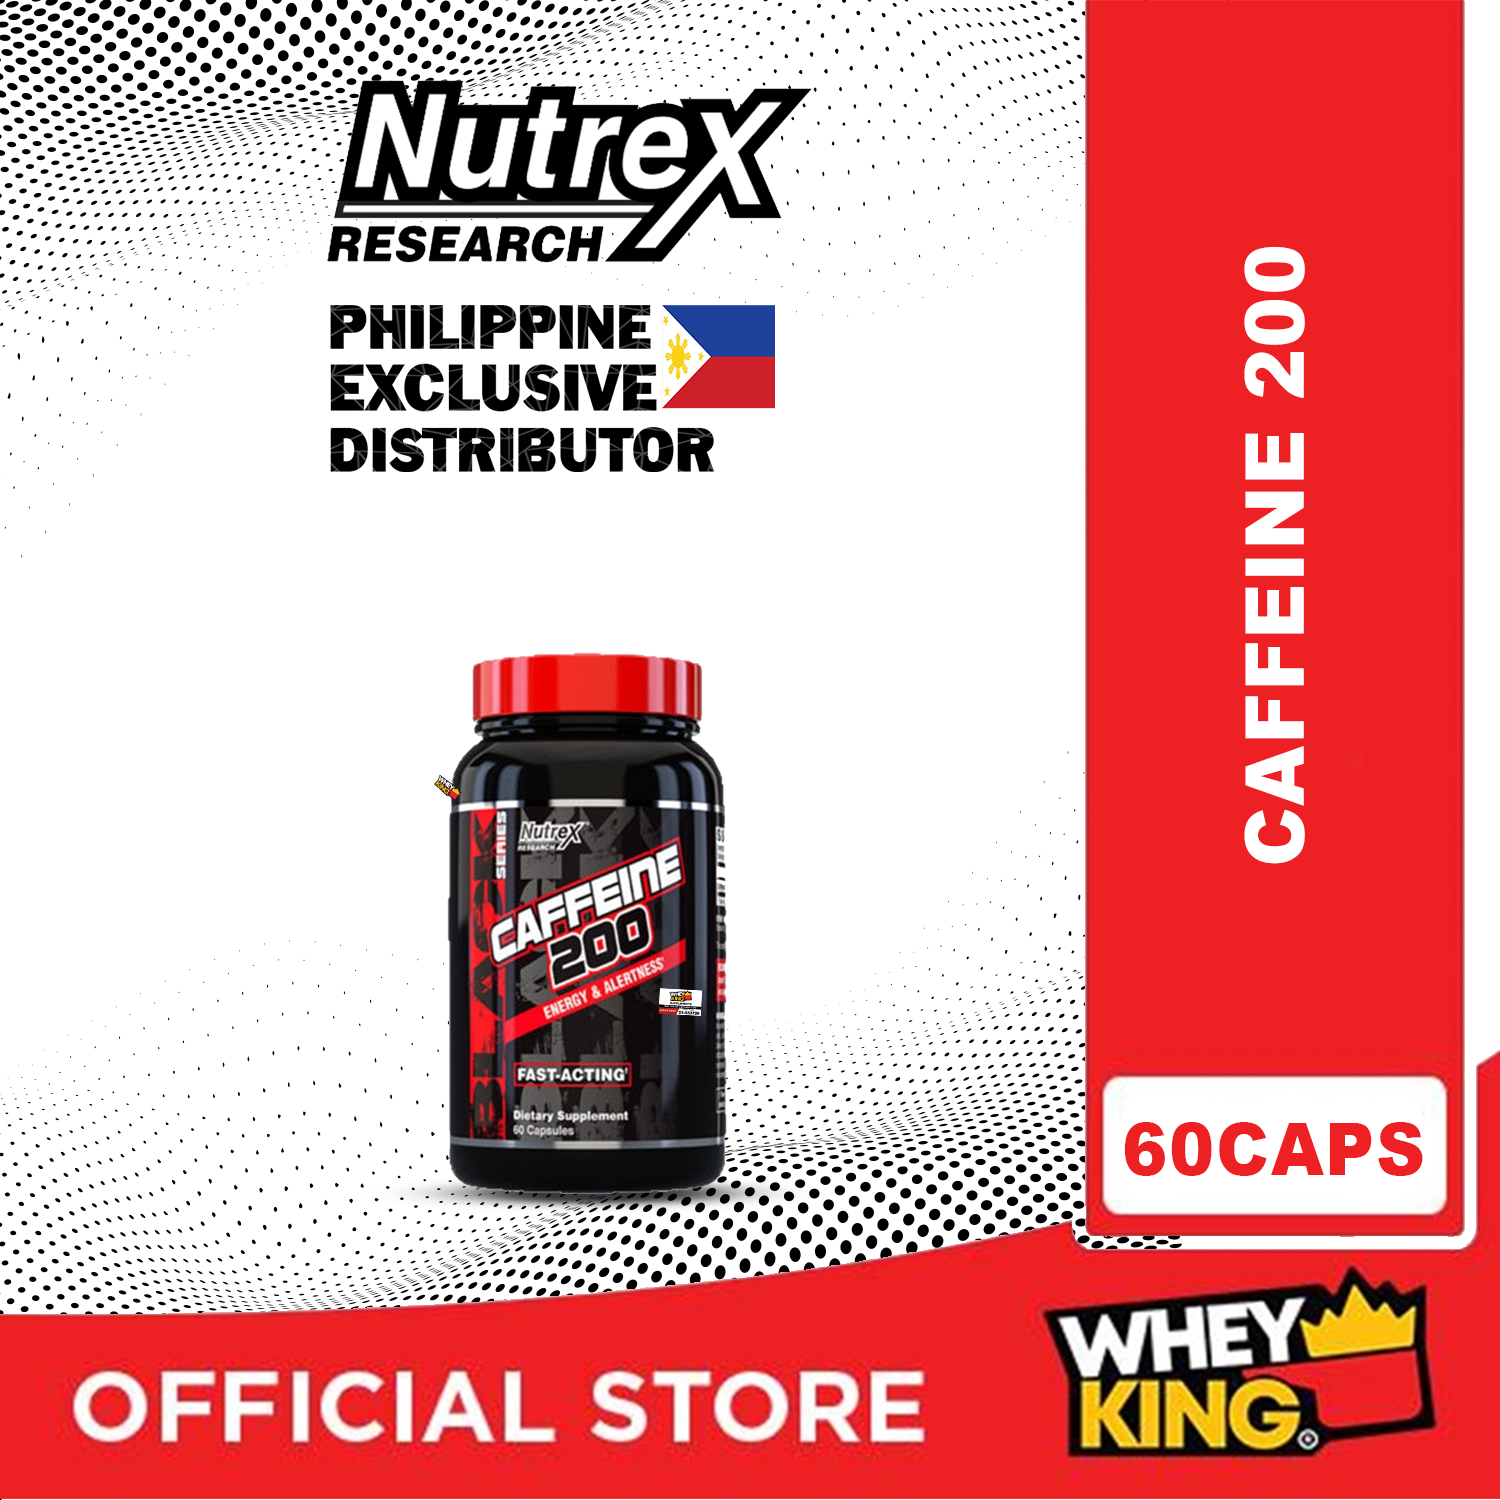 Nutrex Caffeine 200 Energy and Alertness - 60 Capsules